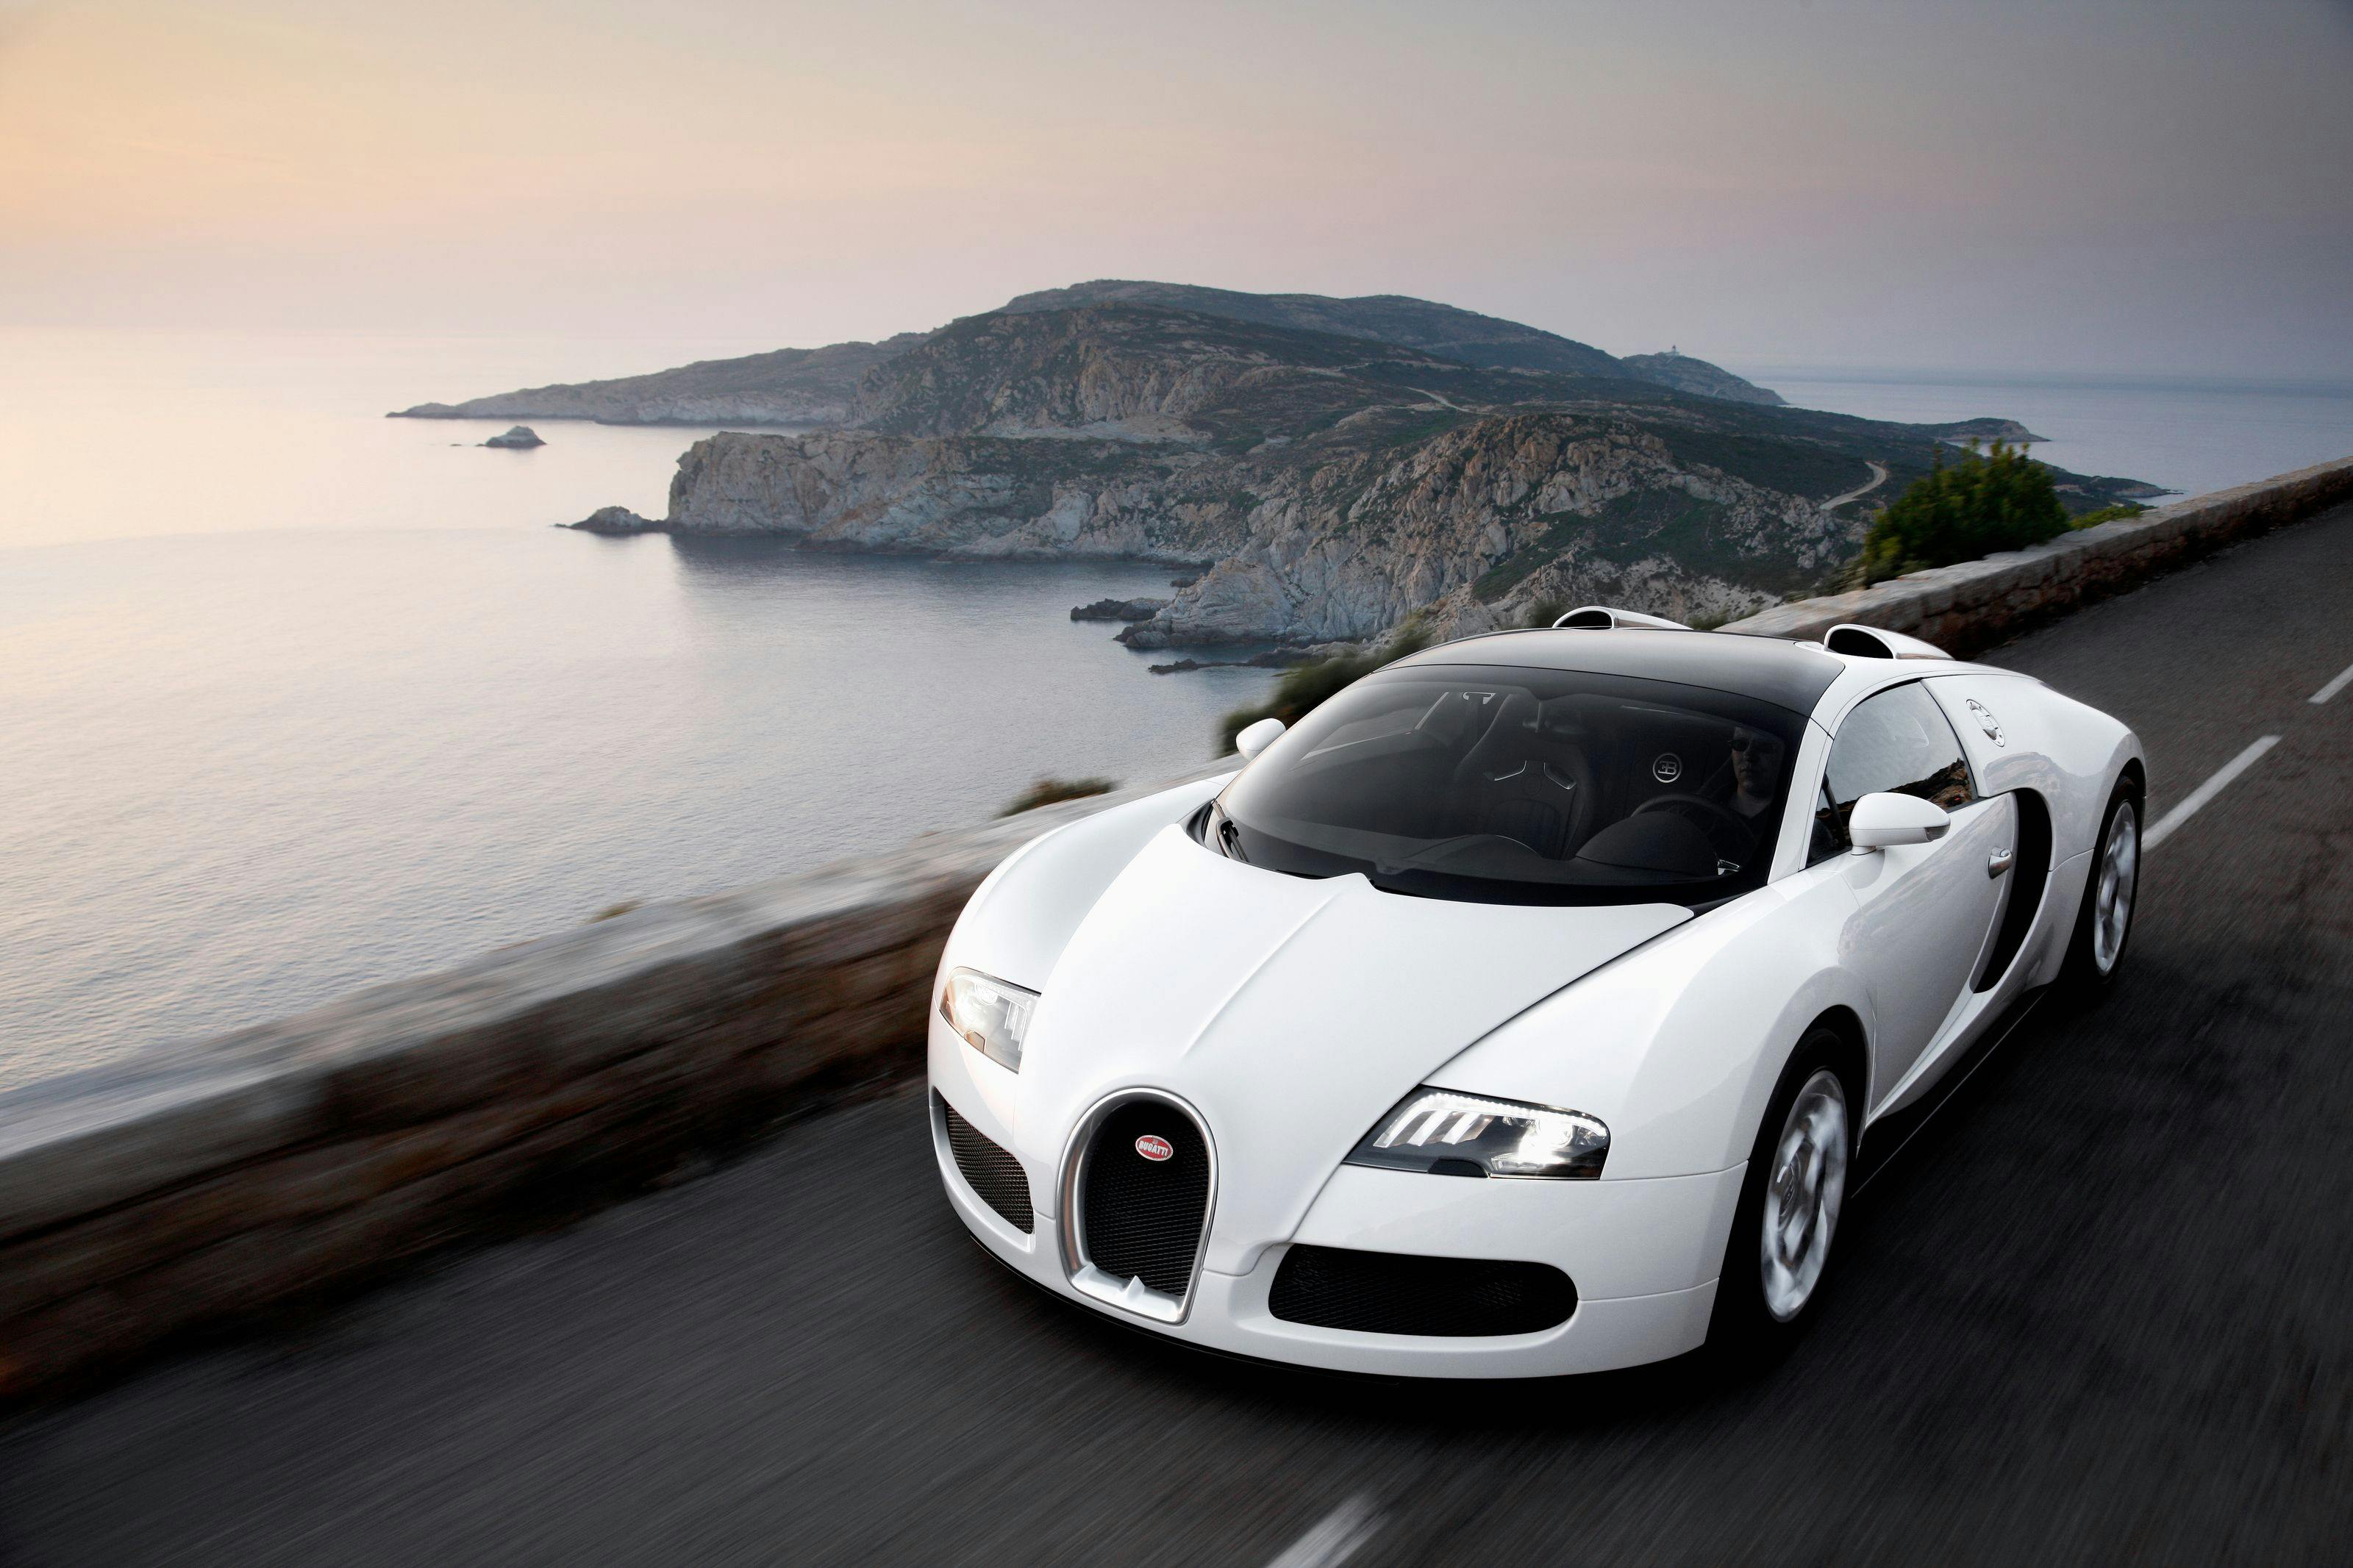 Bugatti expands product range with Bugatti Veyron 16.4 Grand Sport (Location photos)